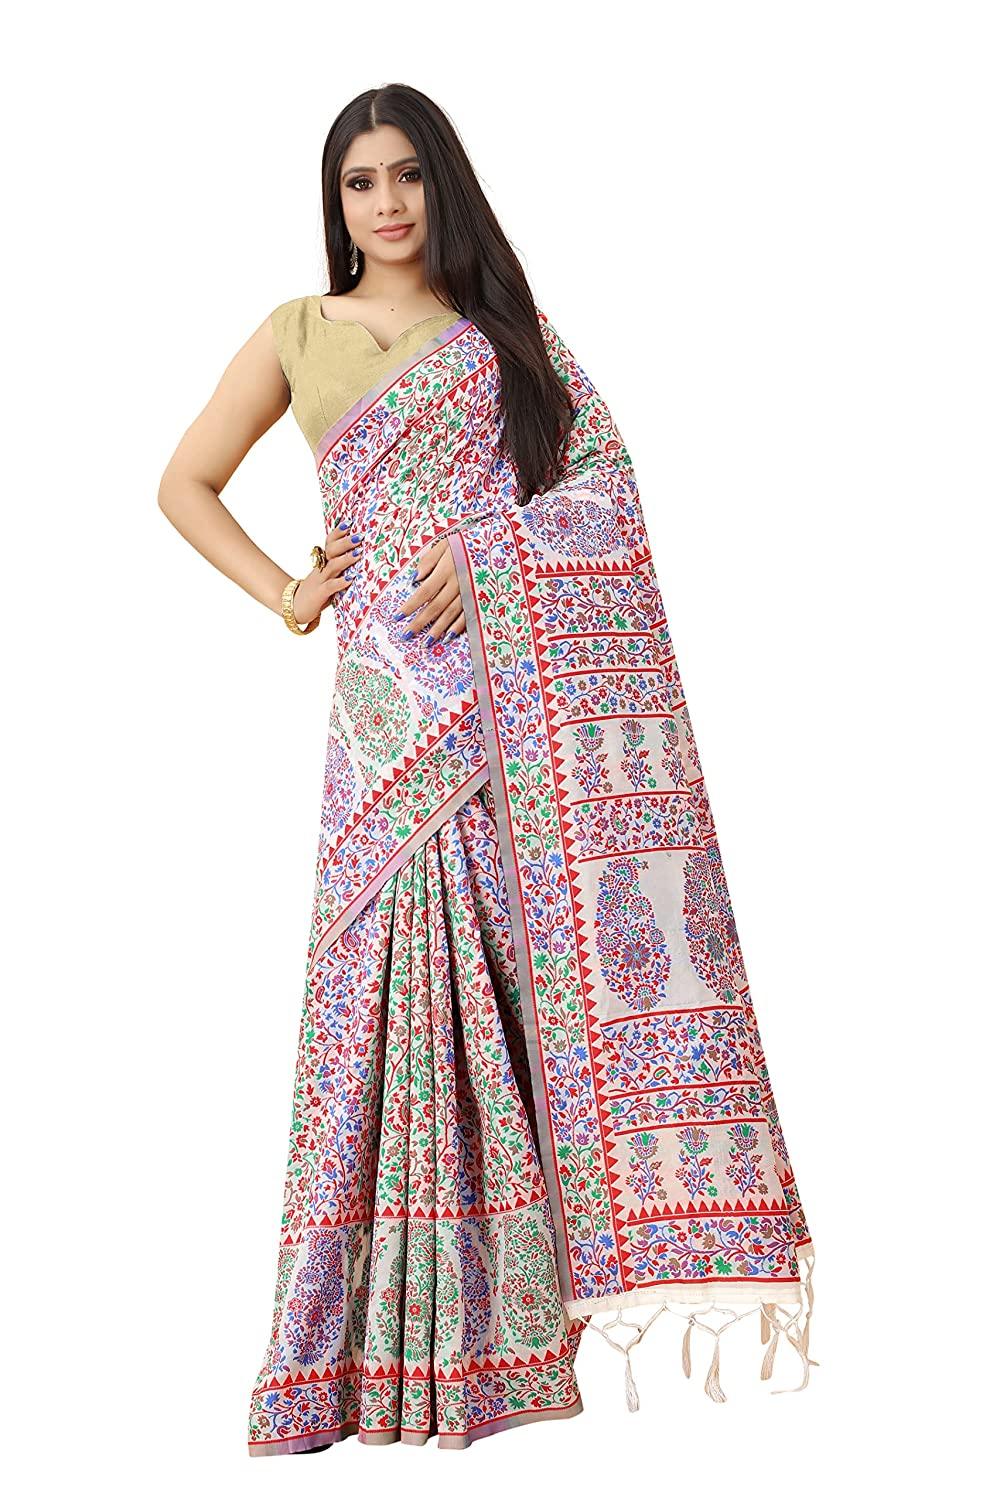 Women's Kalamkari Jacquard Cotton Saree With Blouse Piece Indian Sari Traditional Saree Wedding Dress Handmade Famous Actress Style Party Wear Free Size Ethenic Wear Clothes For Women - FajarShuruqSA